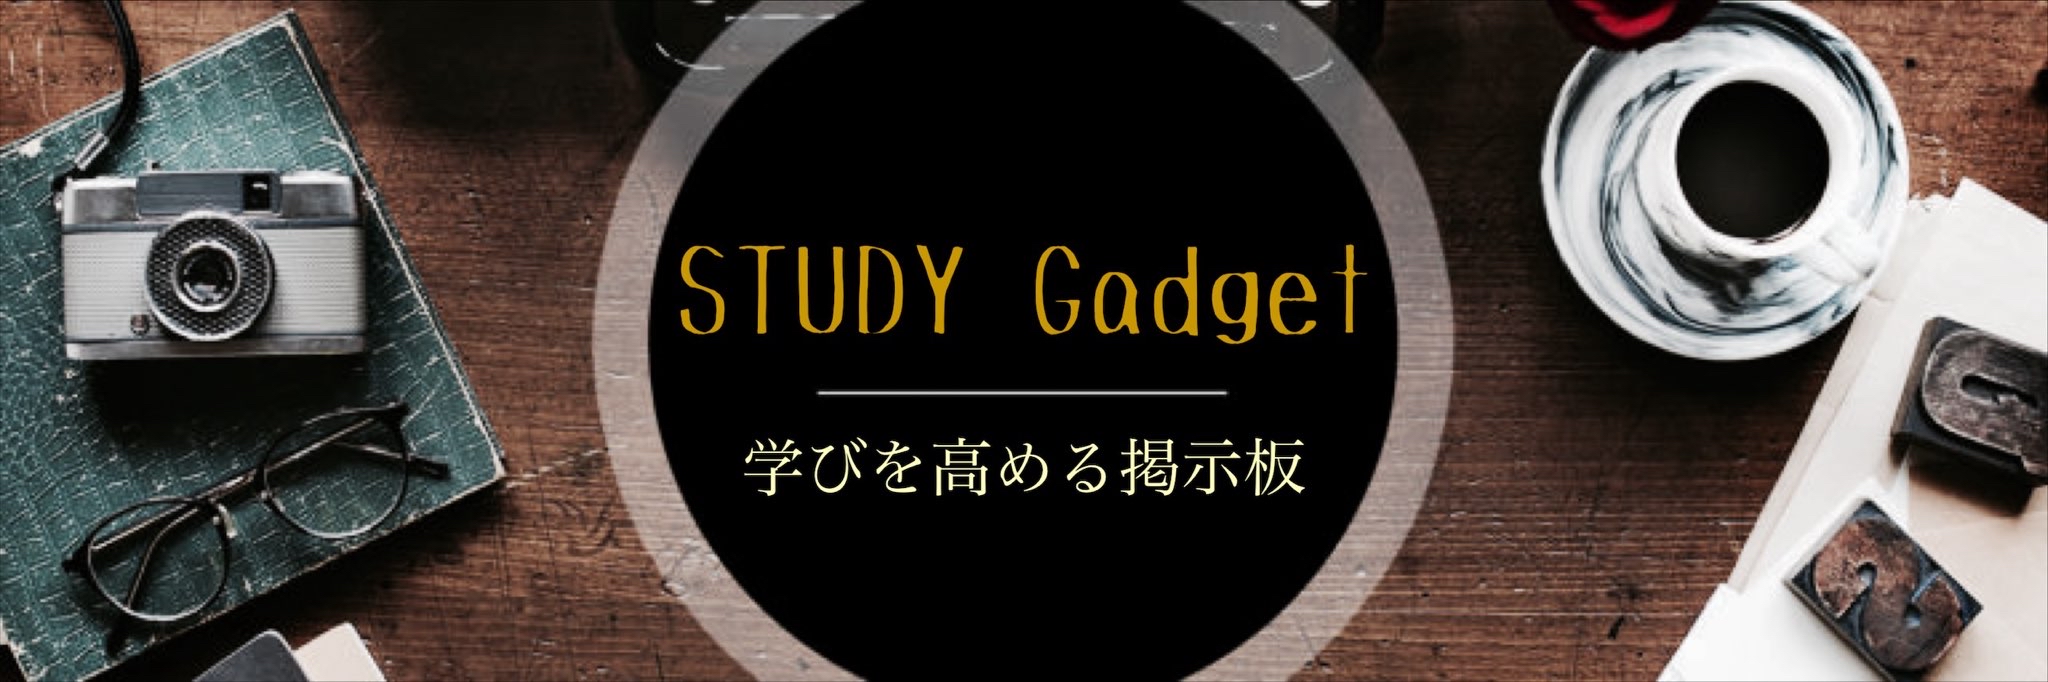 STUDY Gadget